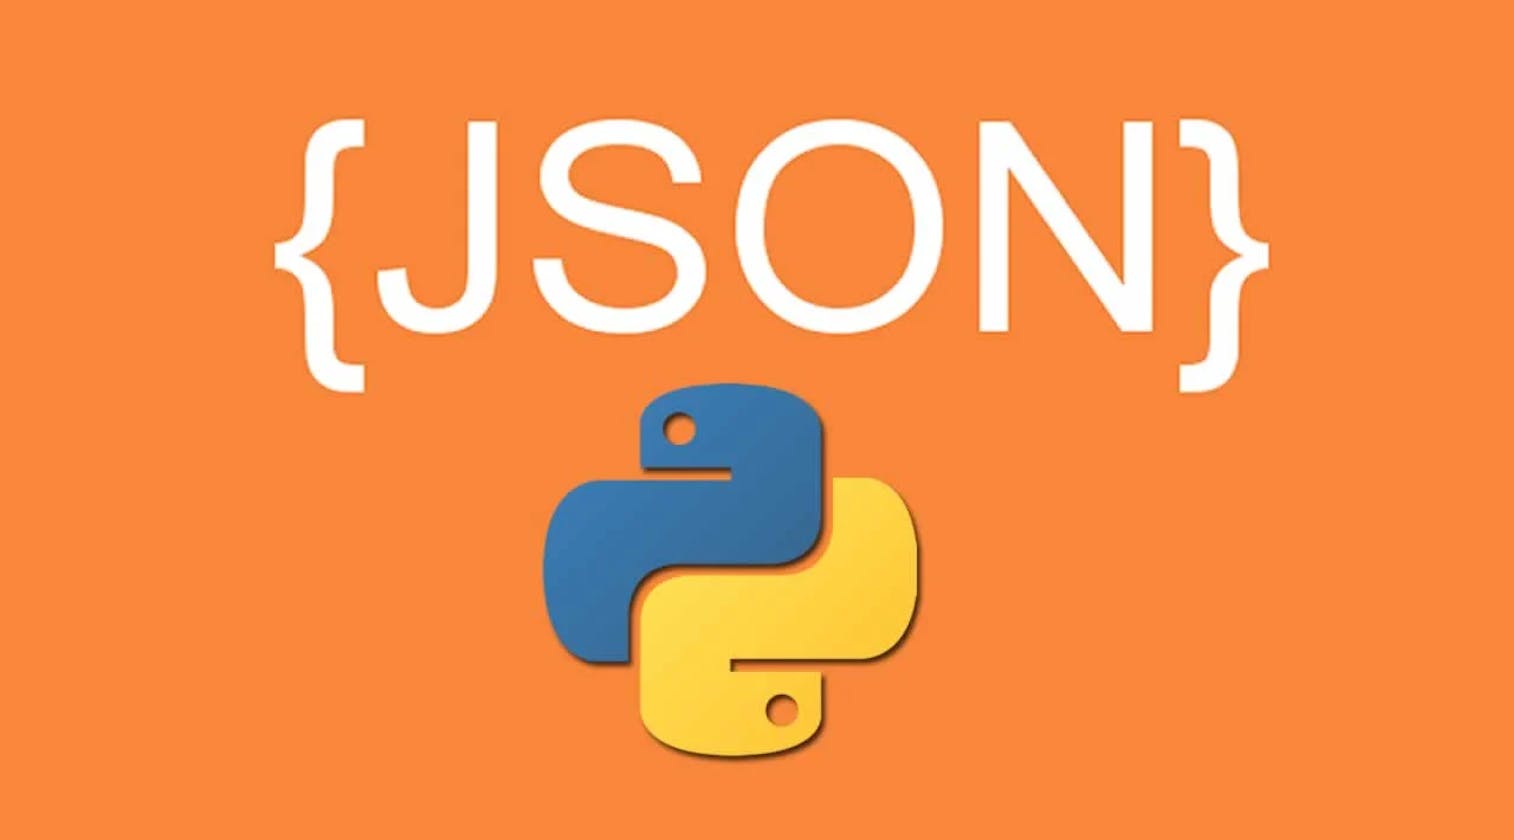 Day 15 Task: Python Libraries for DevOps: